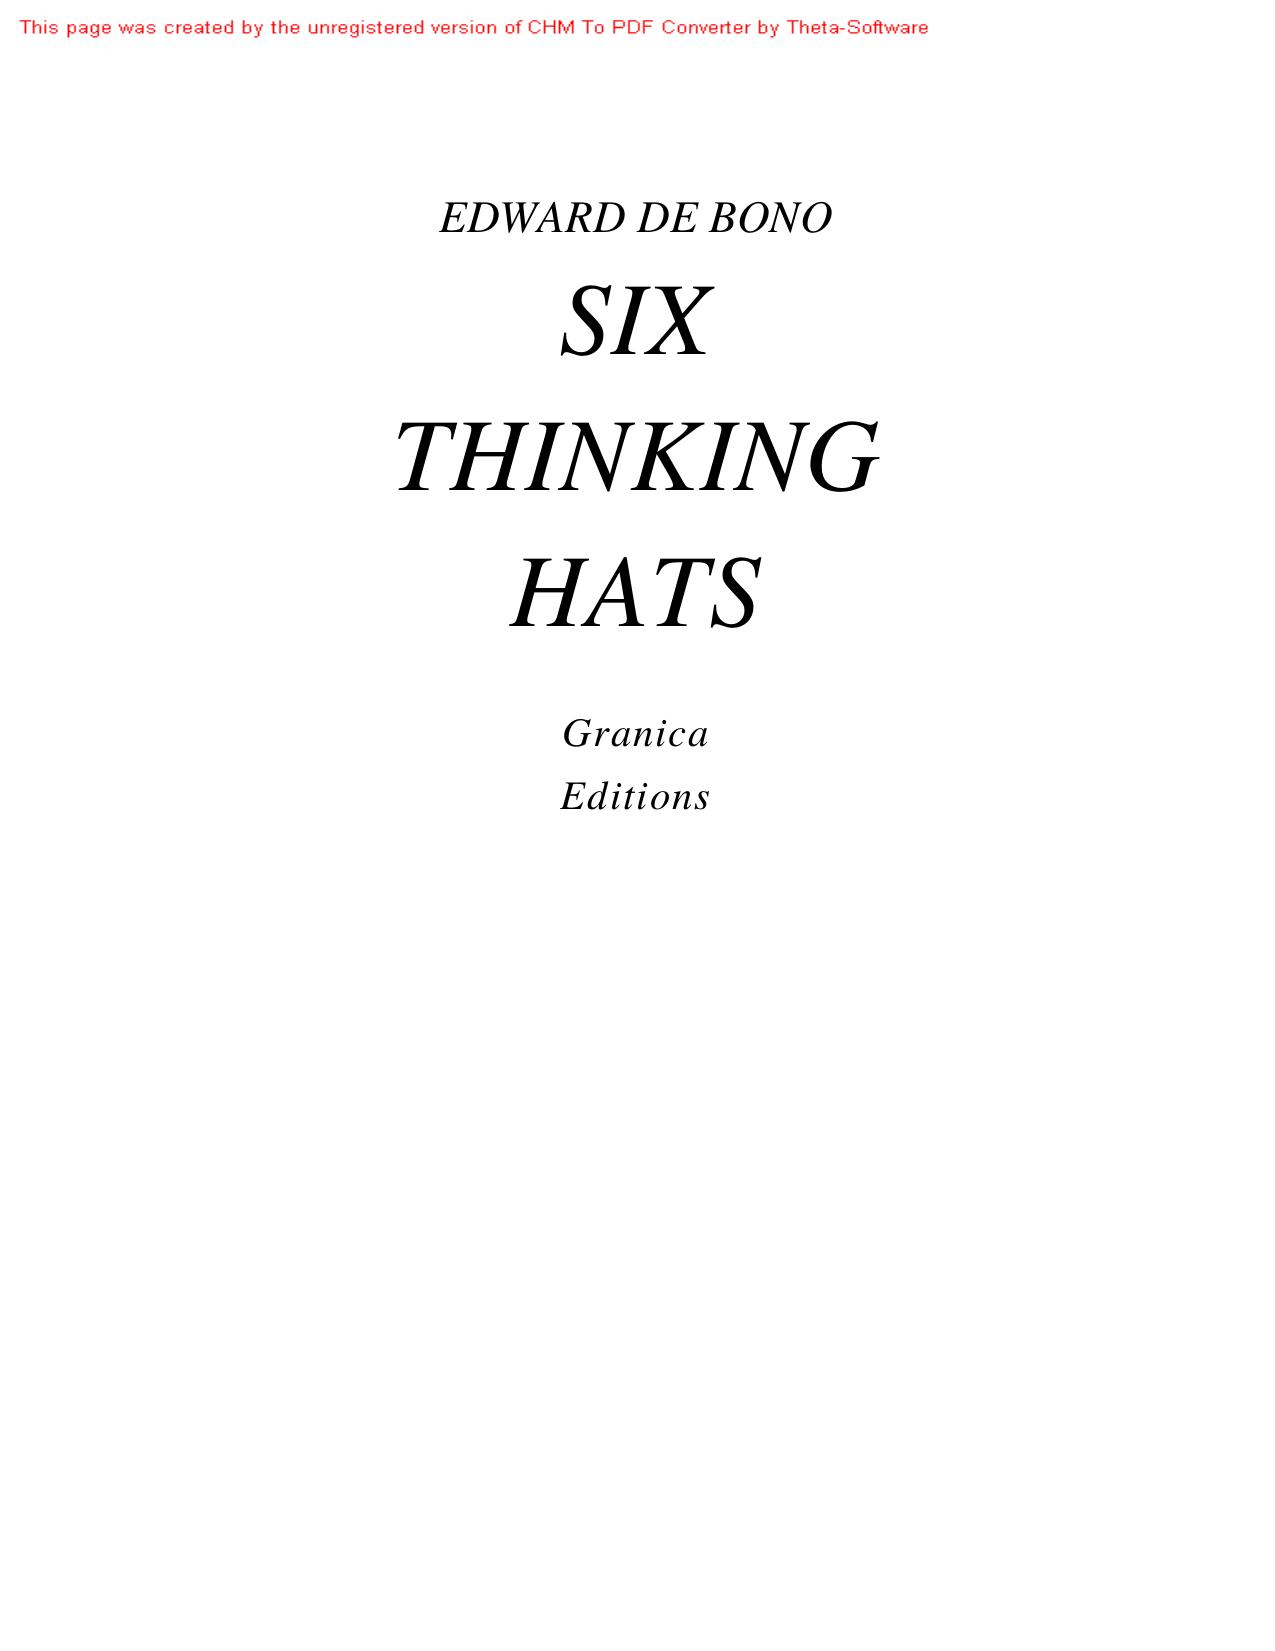 Six Thinking Hats by Edward De Bono